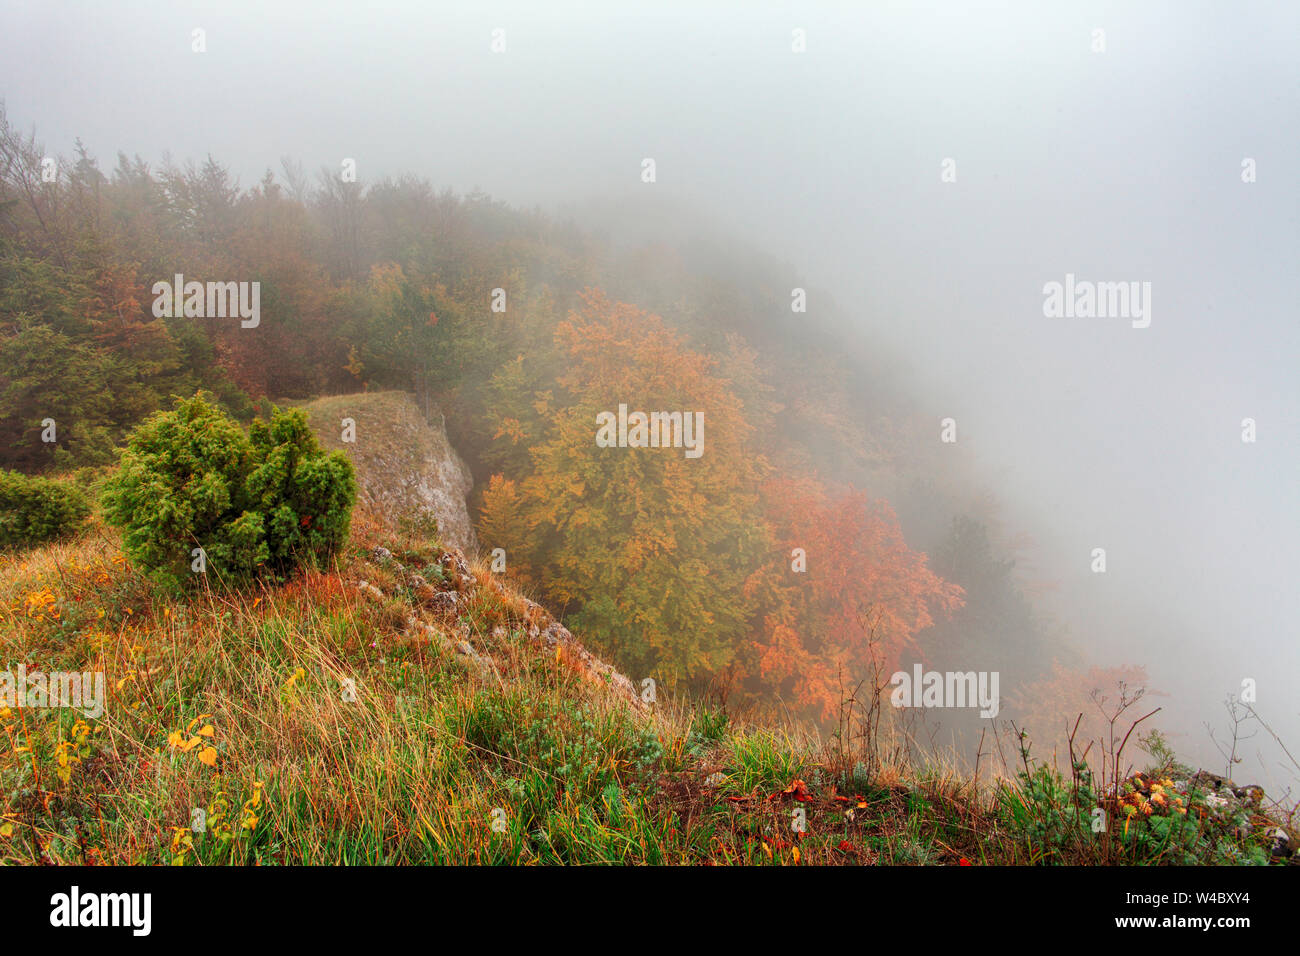 Autumn forest with mist, Fog Stock Photo